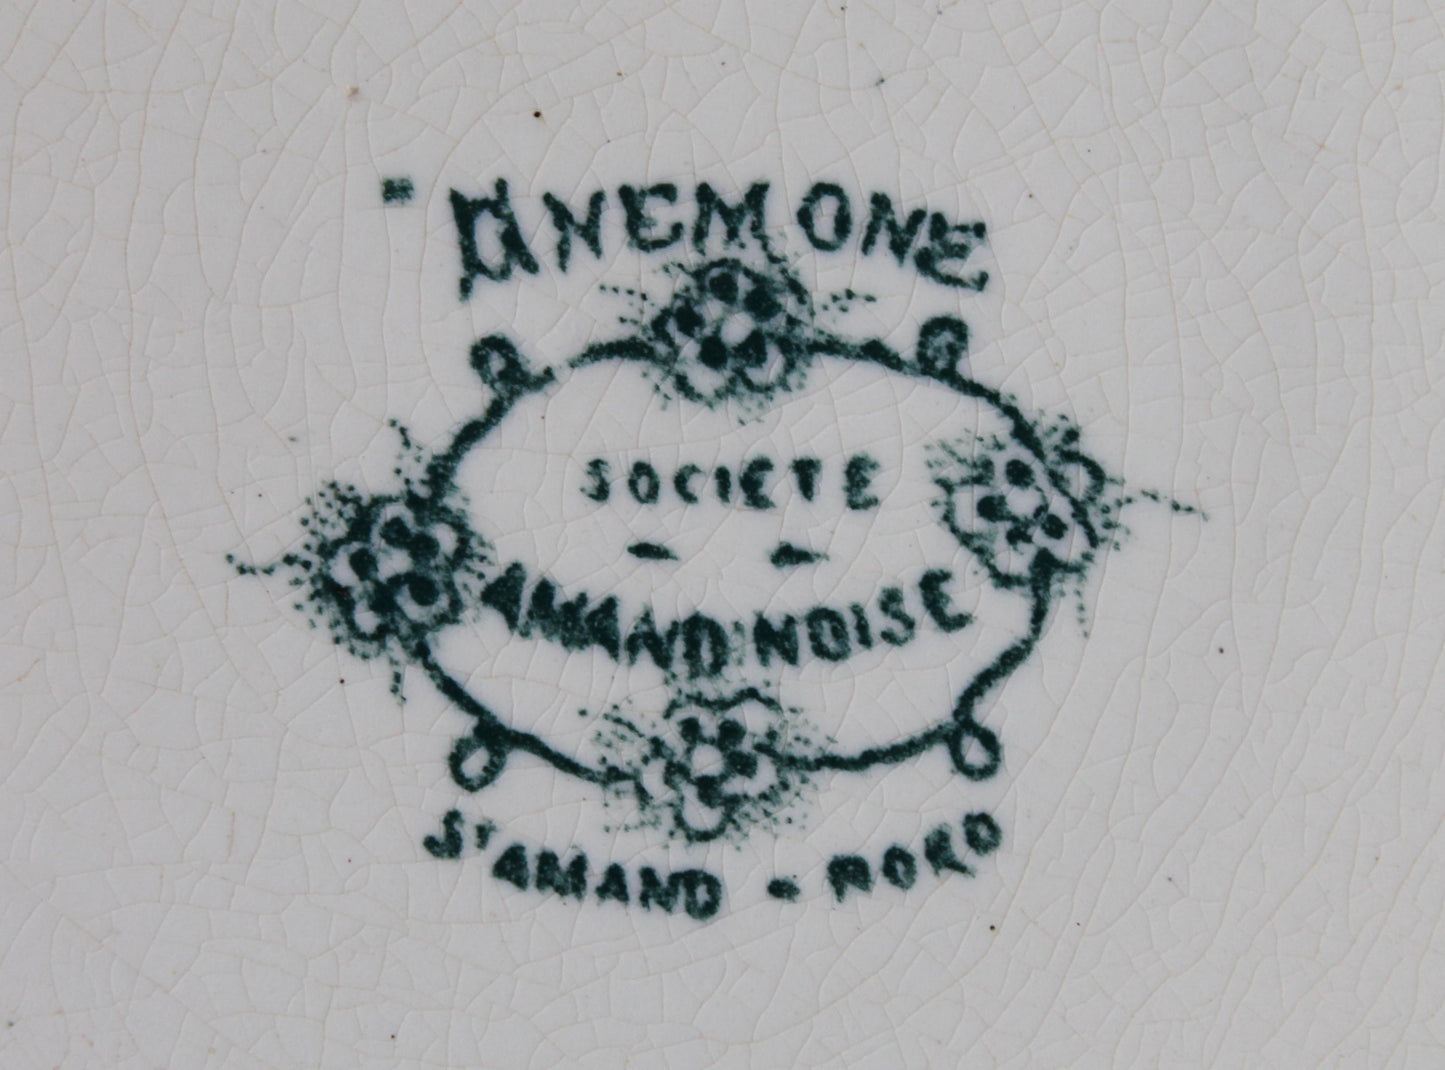 Vintage Anemone Pattern Plate